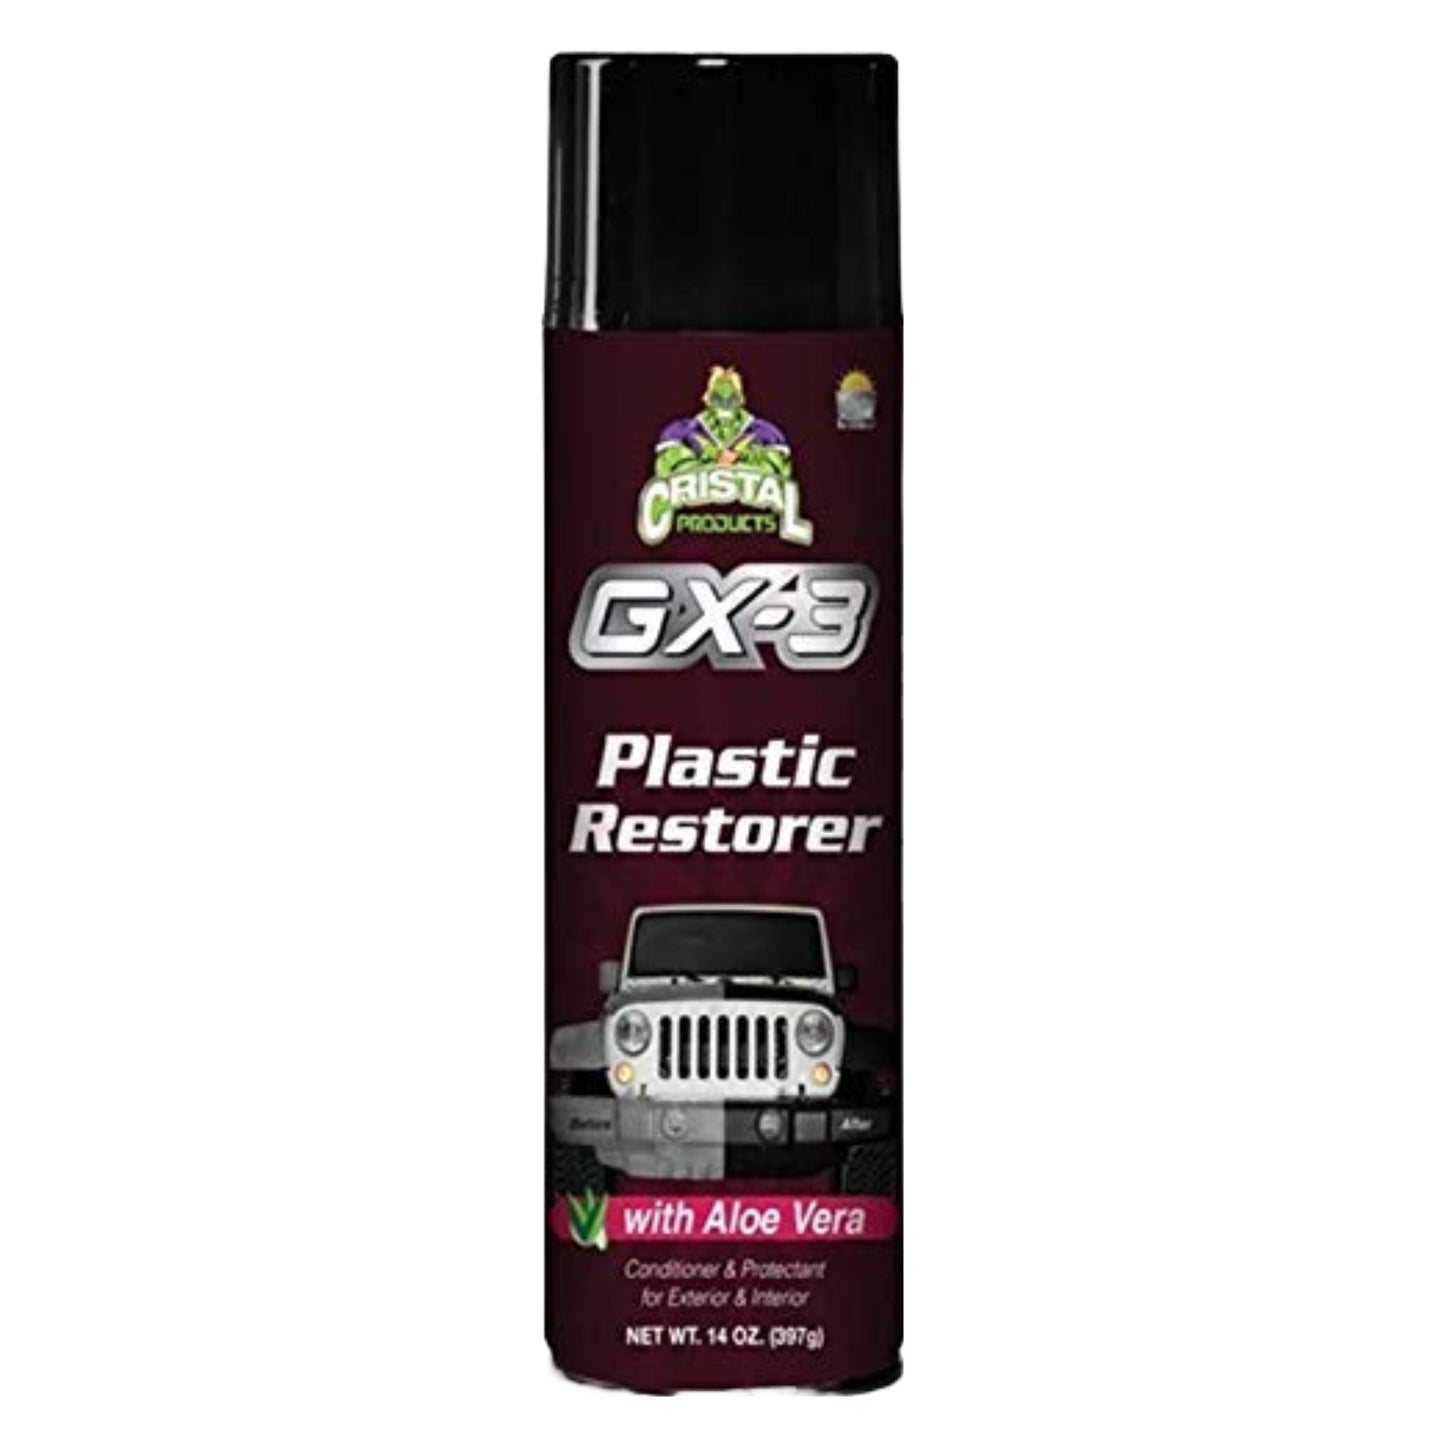 Cristal GX3 Plastic Restorer